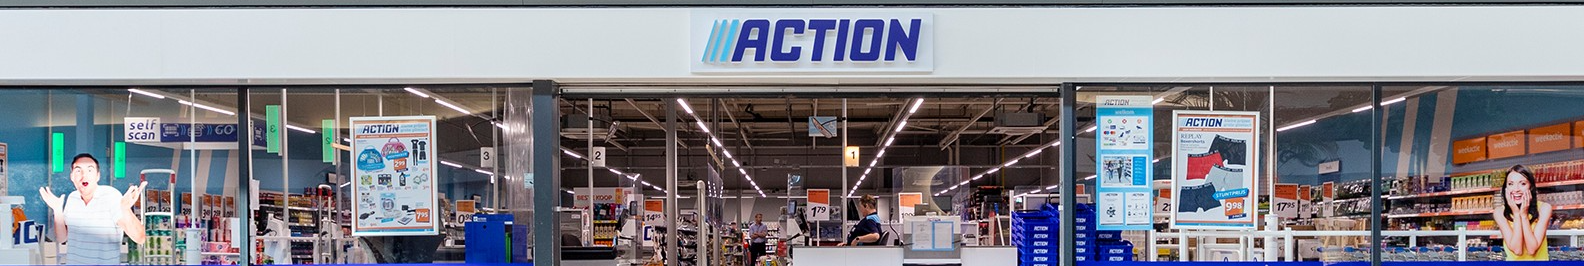 Action Retail Austria GmbH background